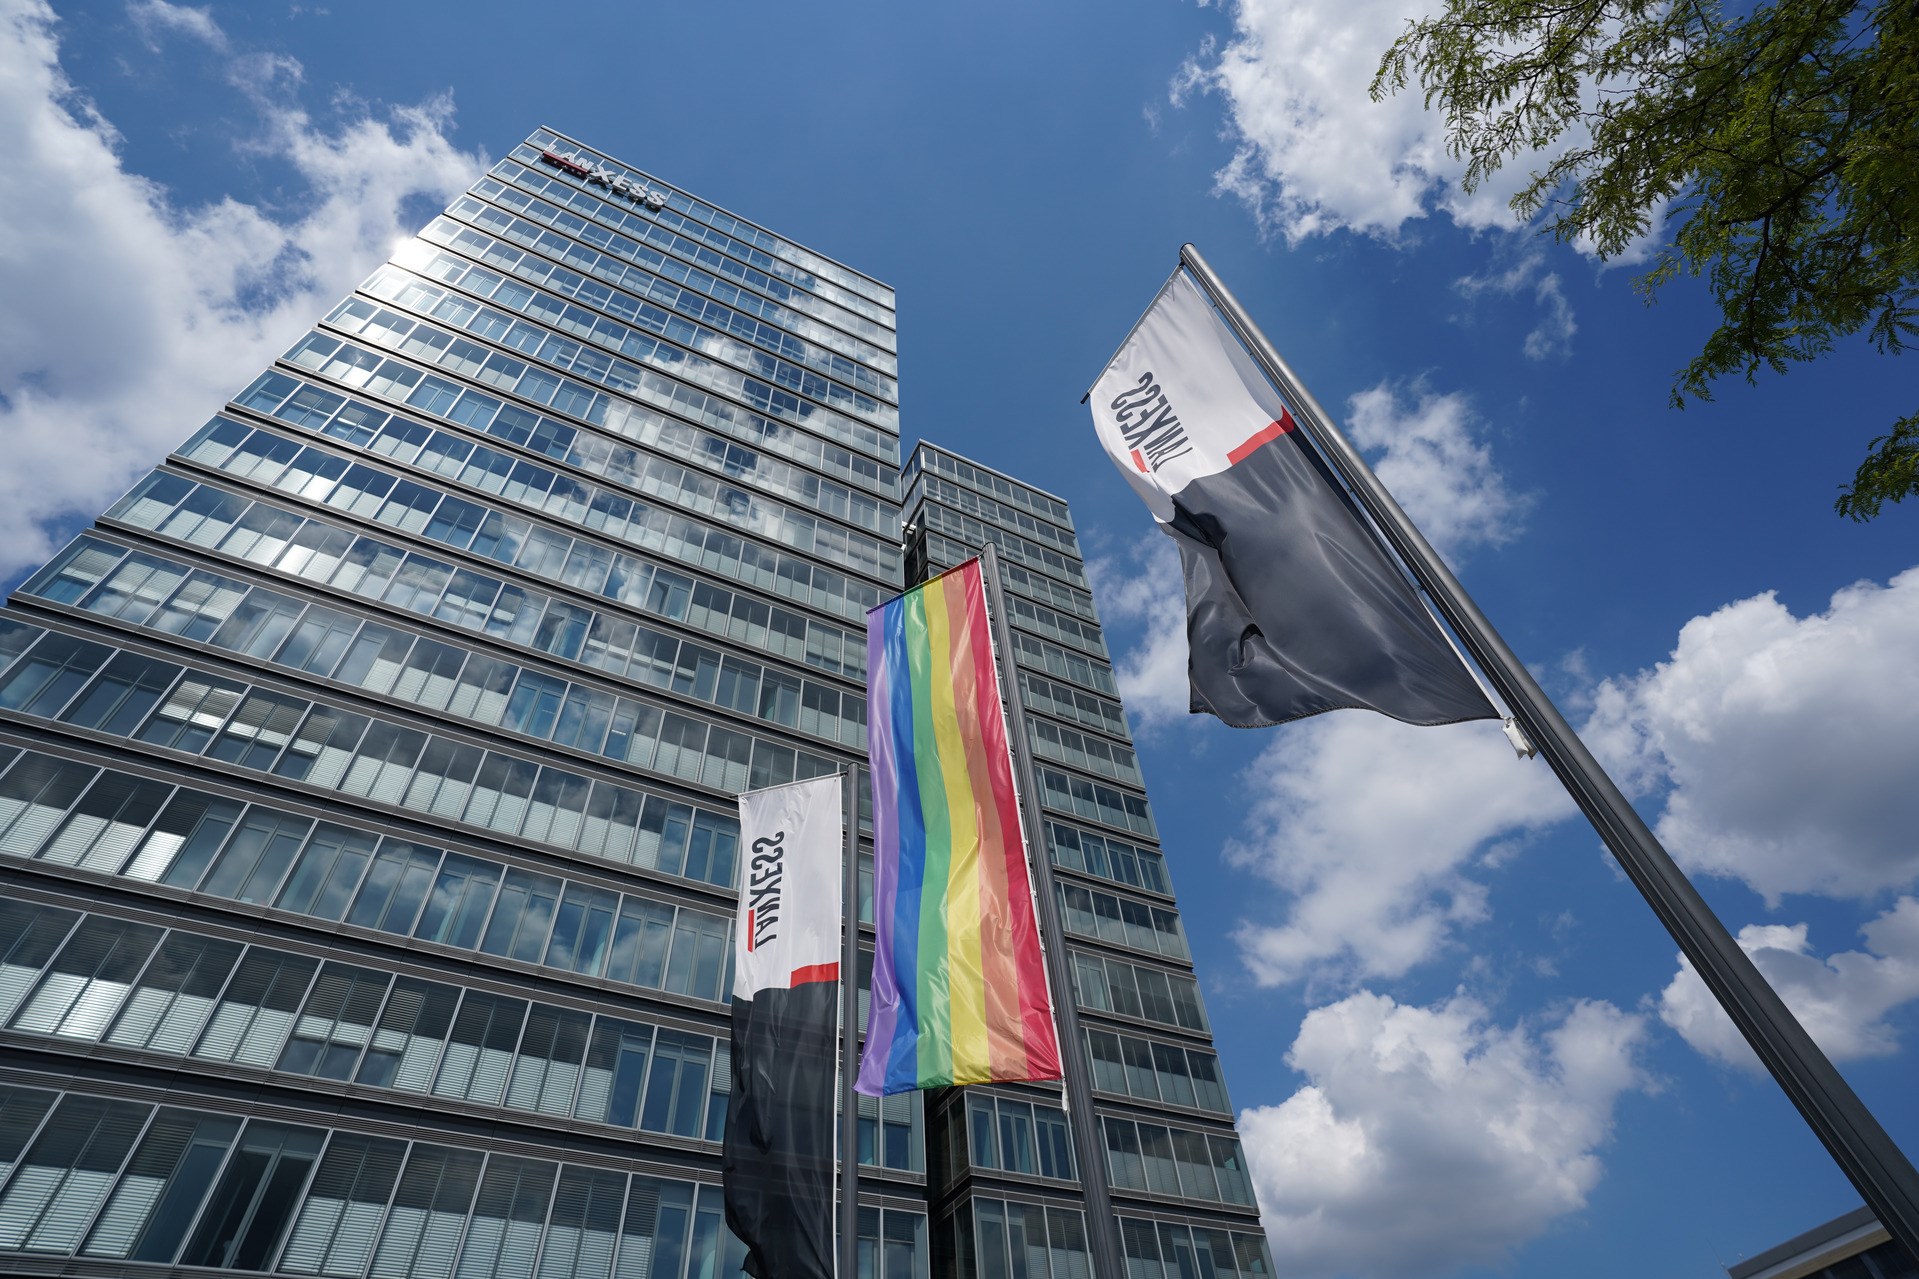 LANXESS Tower, Köln, Flagge, Fahne, Regenbogenflagge, CSD, Christopher Street Day